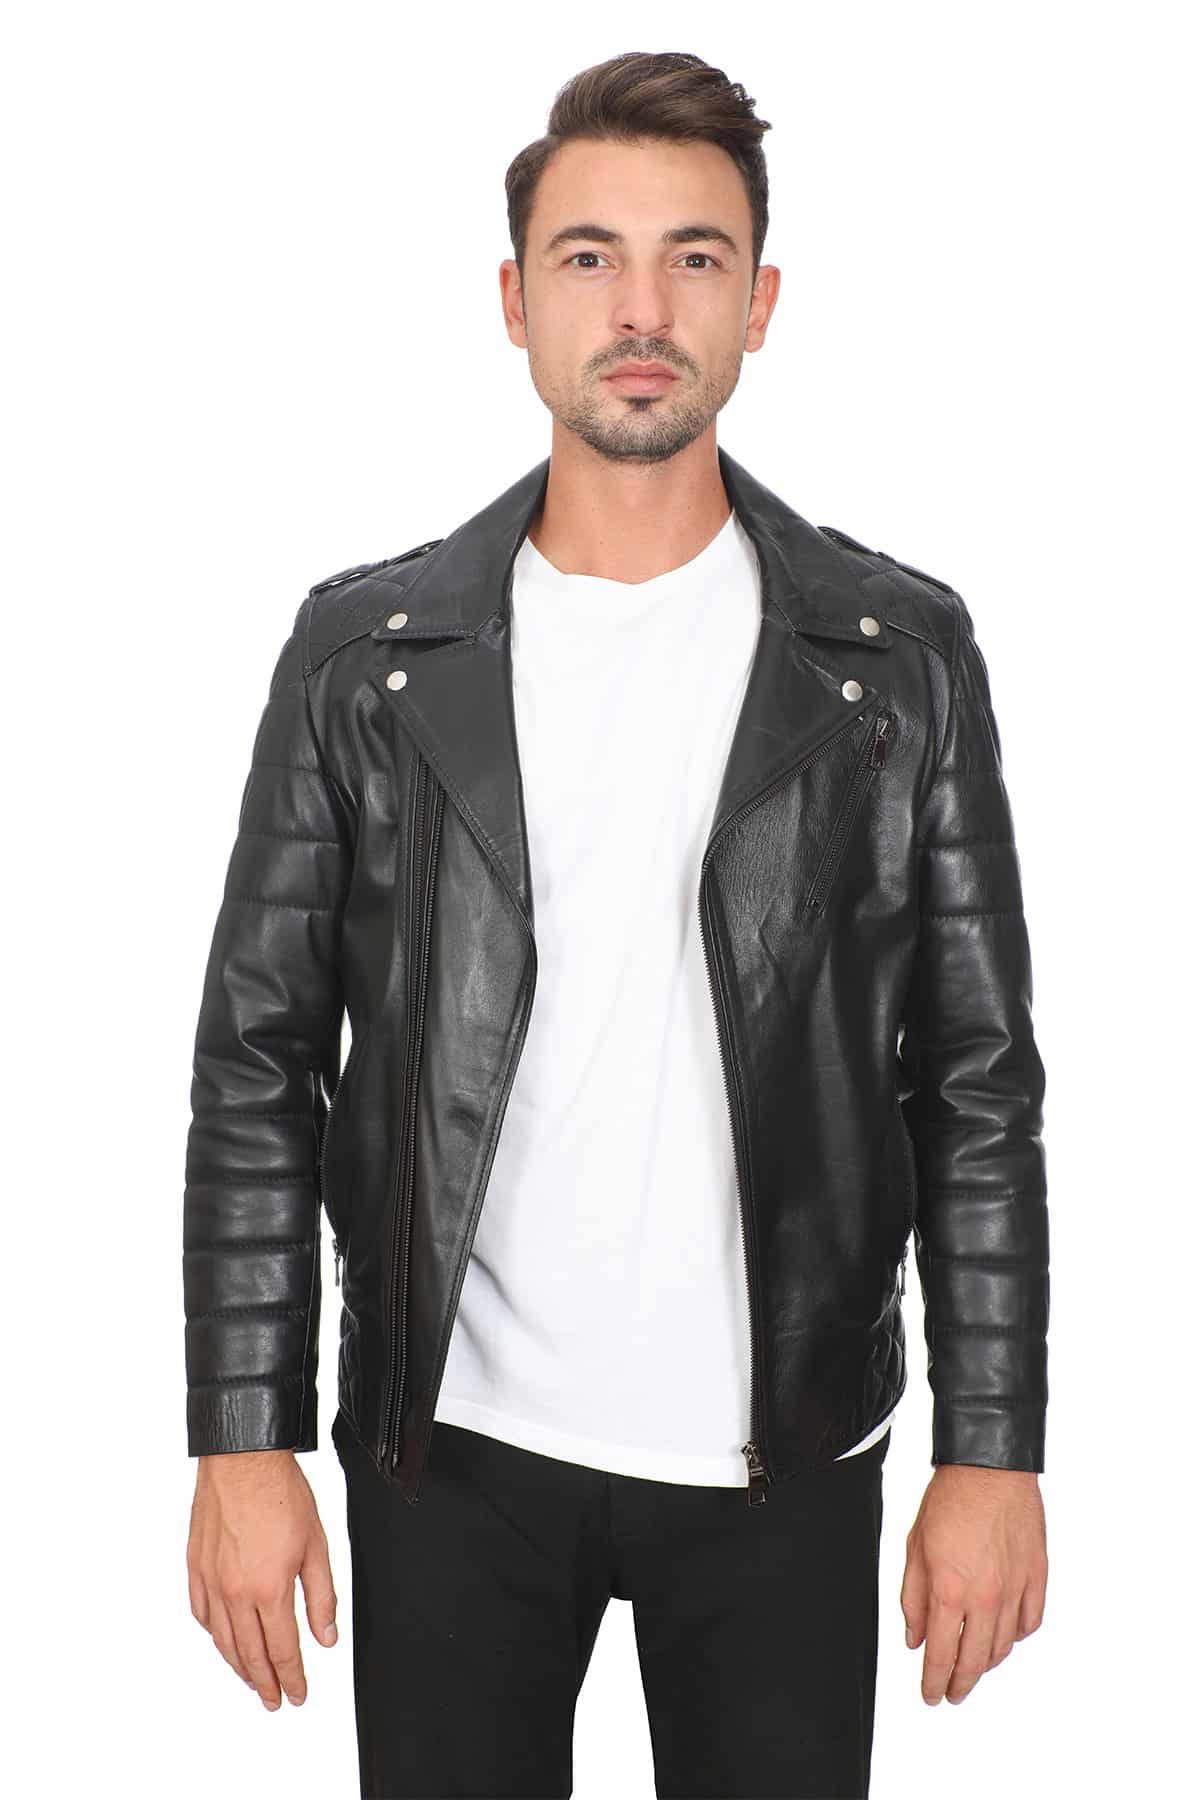 Peter Men's 100 % Real Black Leather Biker Style Jacket